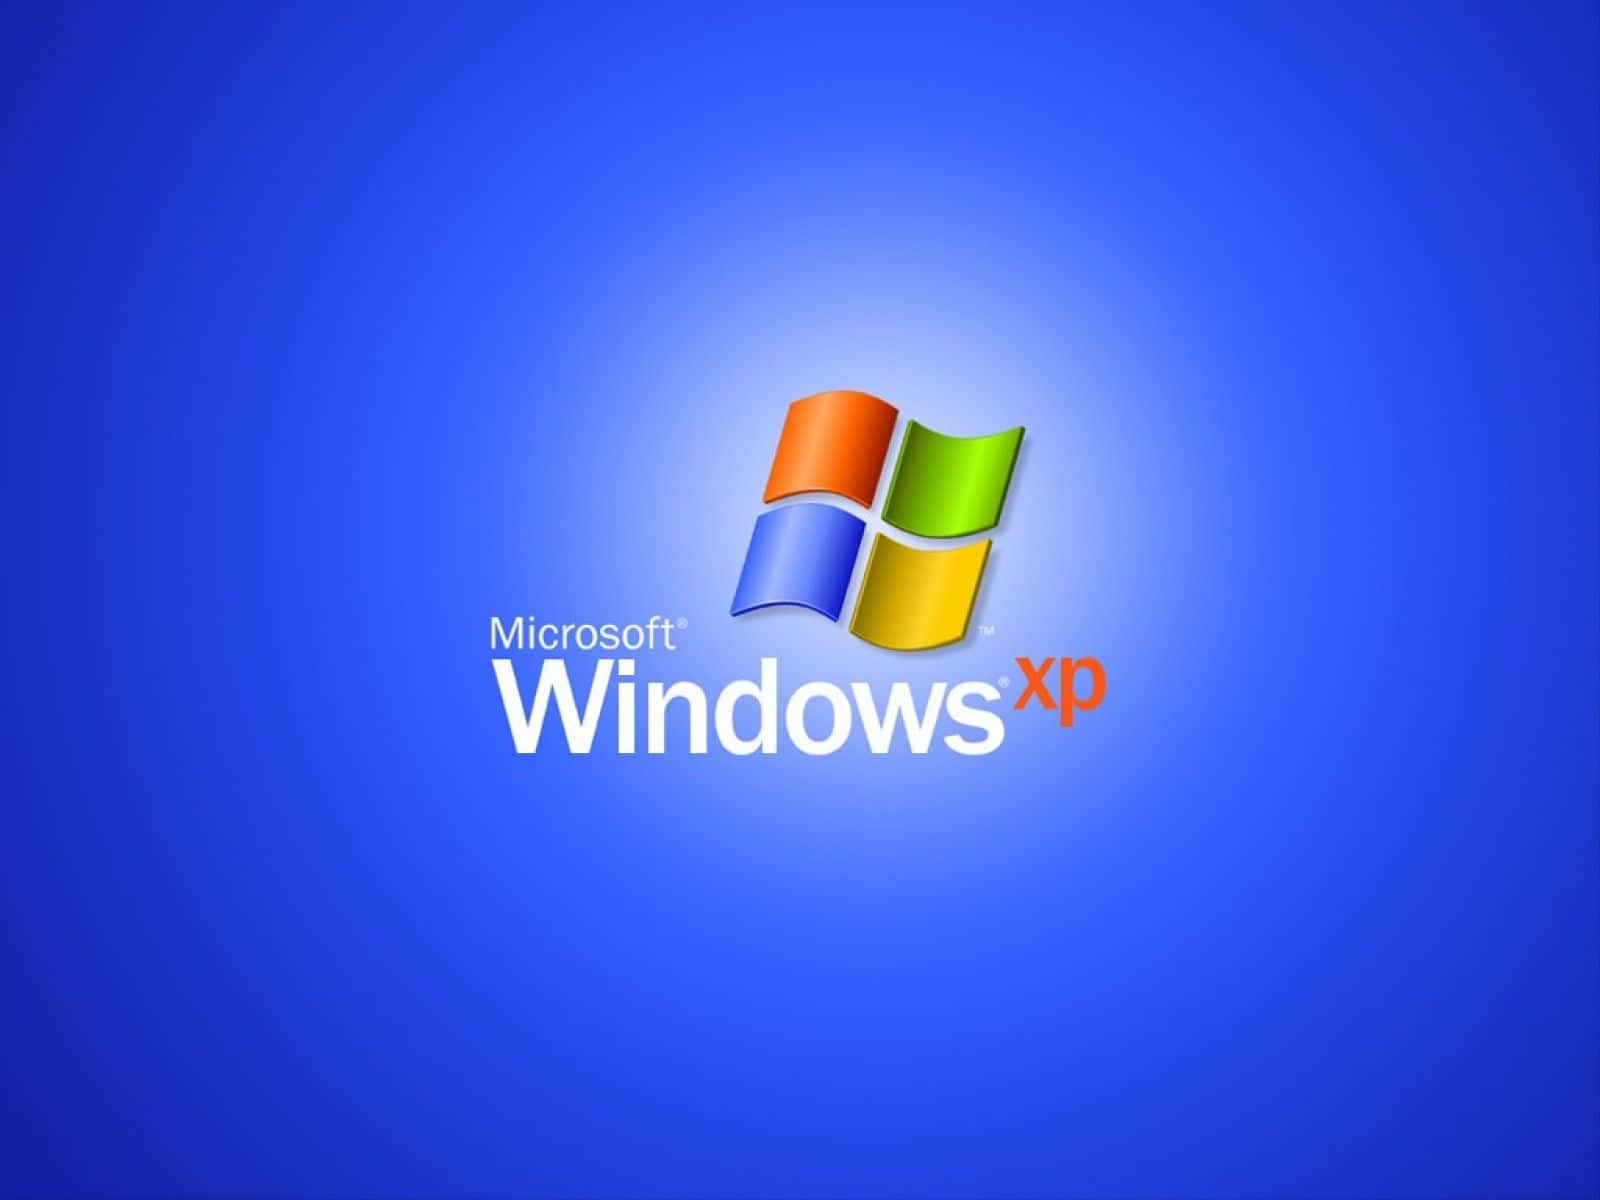 Windowsxp Logotypen. Wallpaper